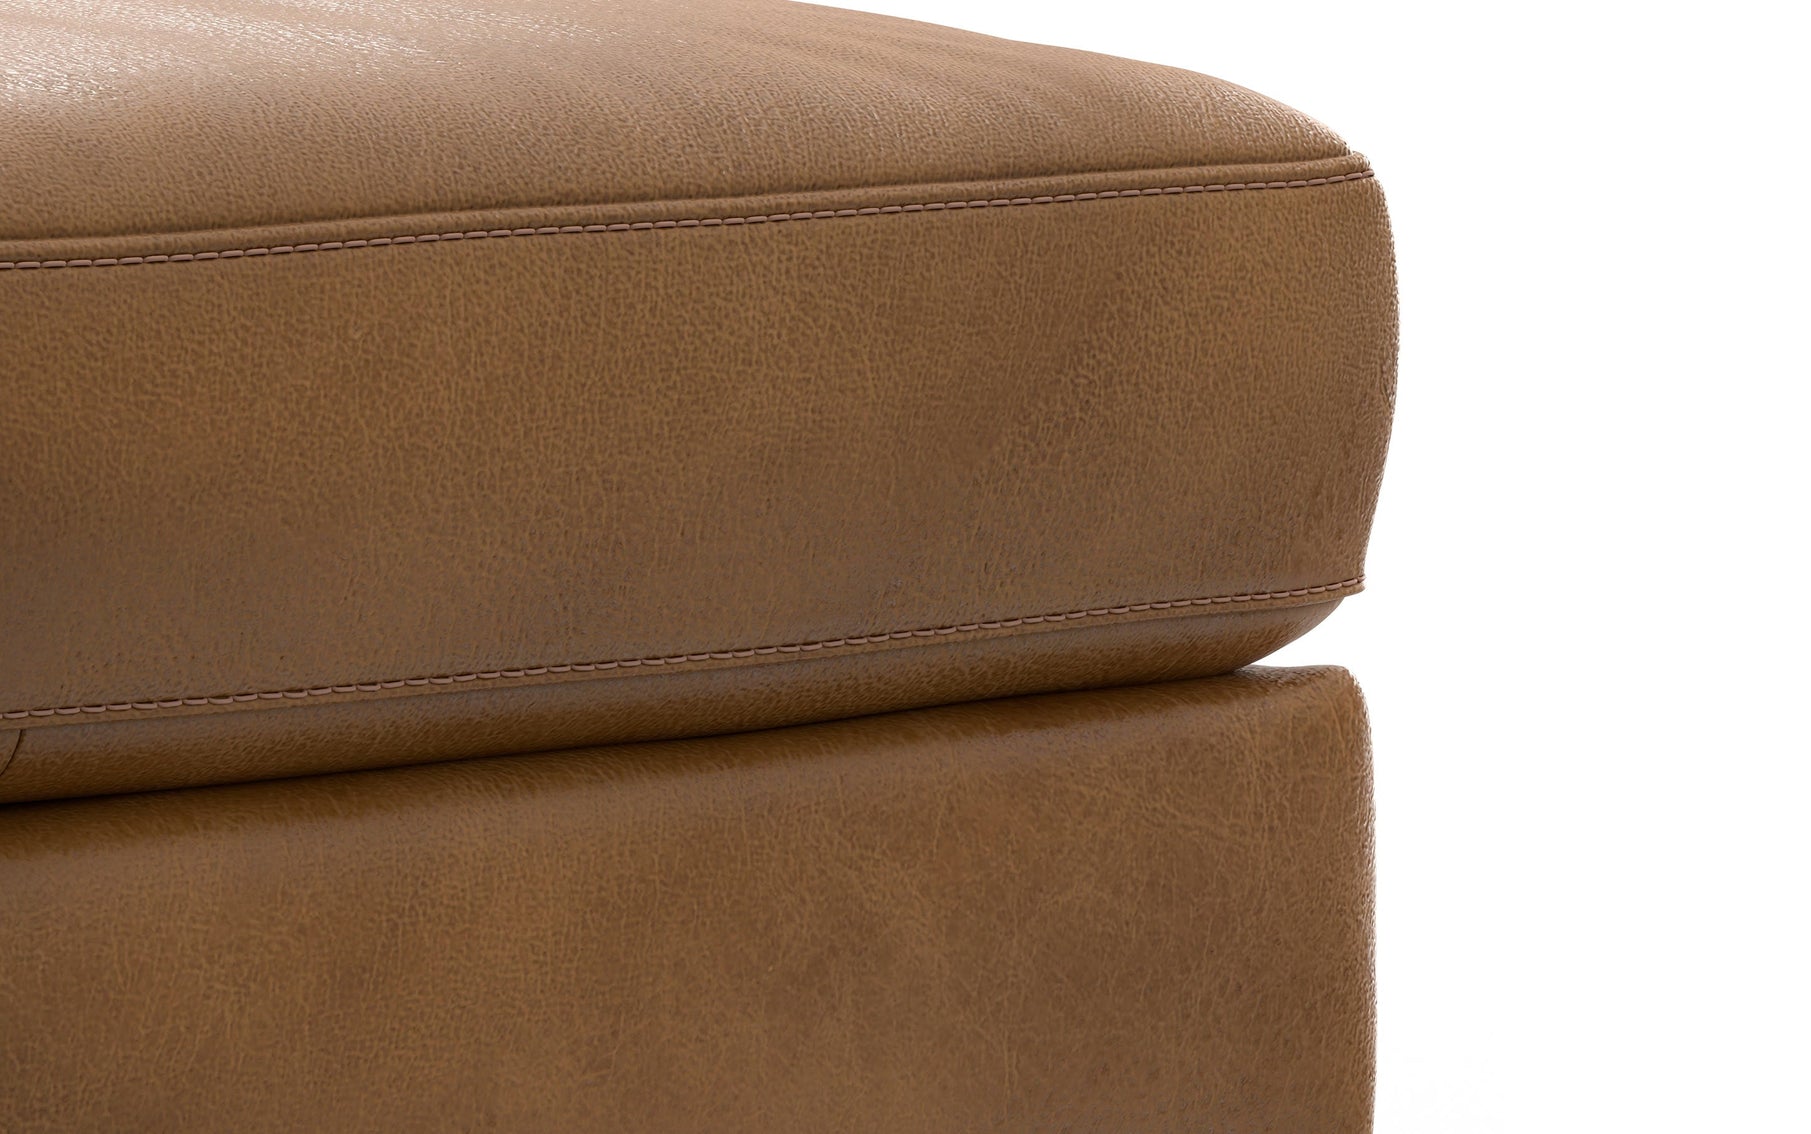 Caramel Brown Genuine Top Grain Leather | Morrison Large Rectangular Ottoman in Genuine Leather